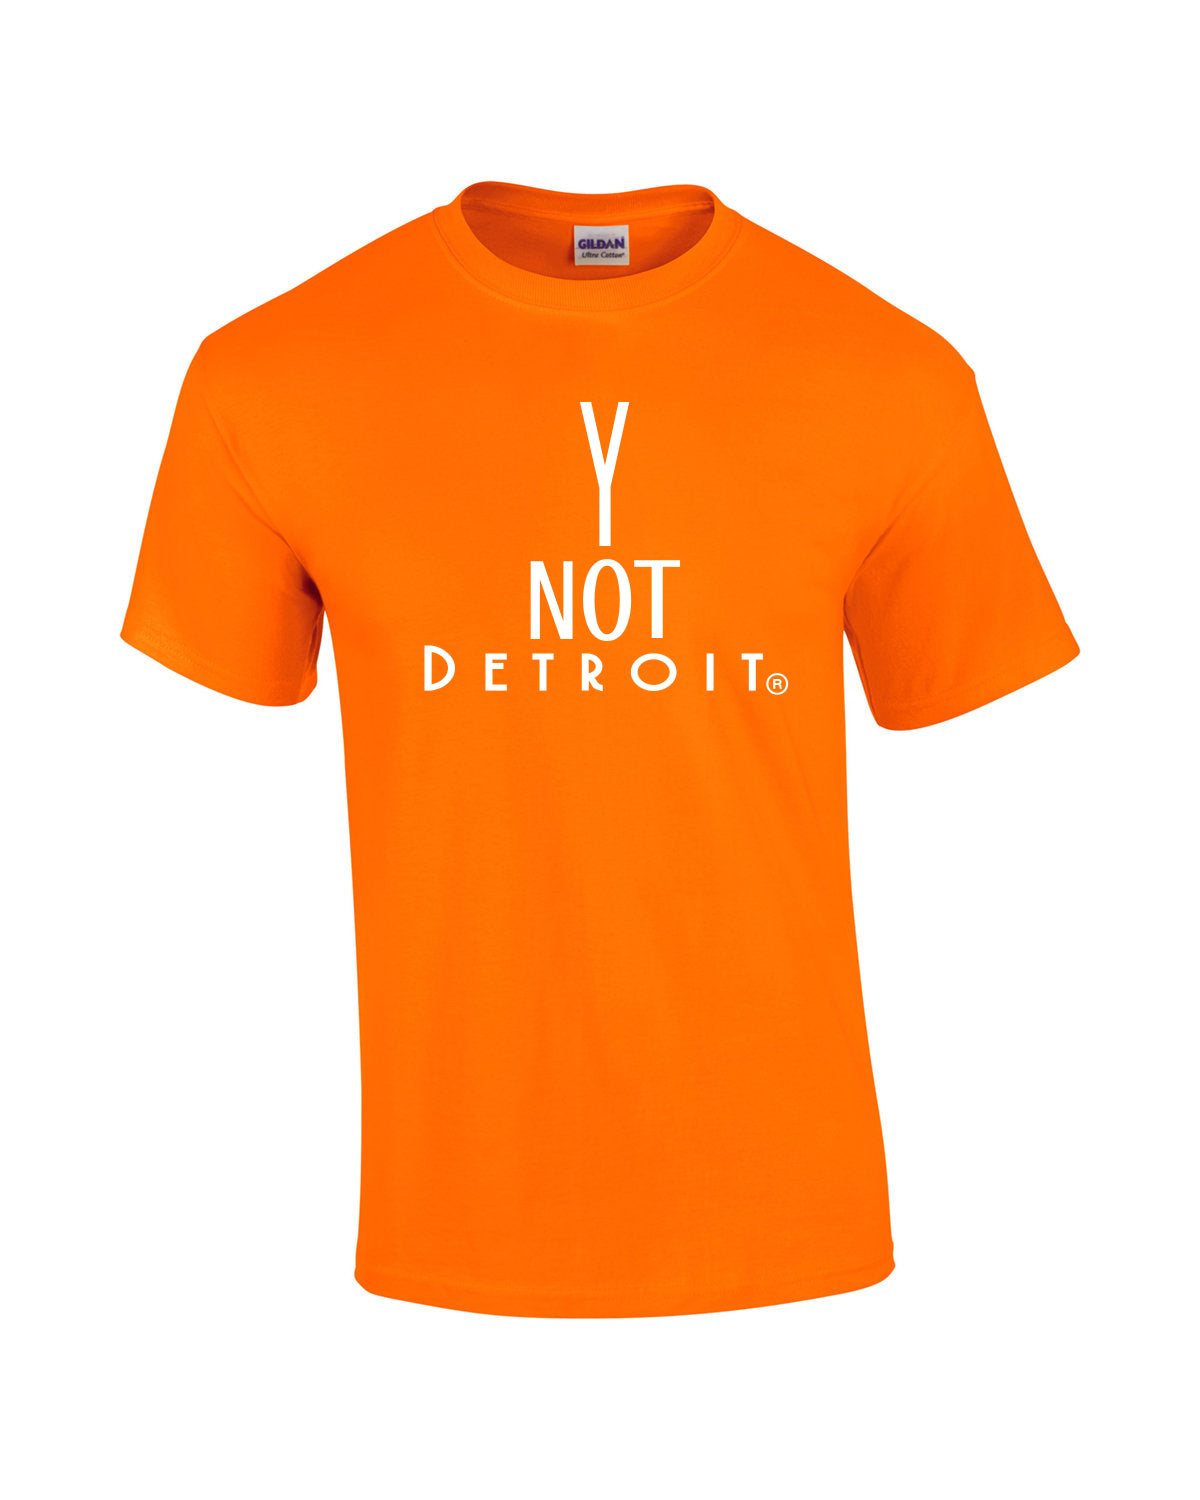 Y NOT Detroit logo t-shirt